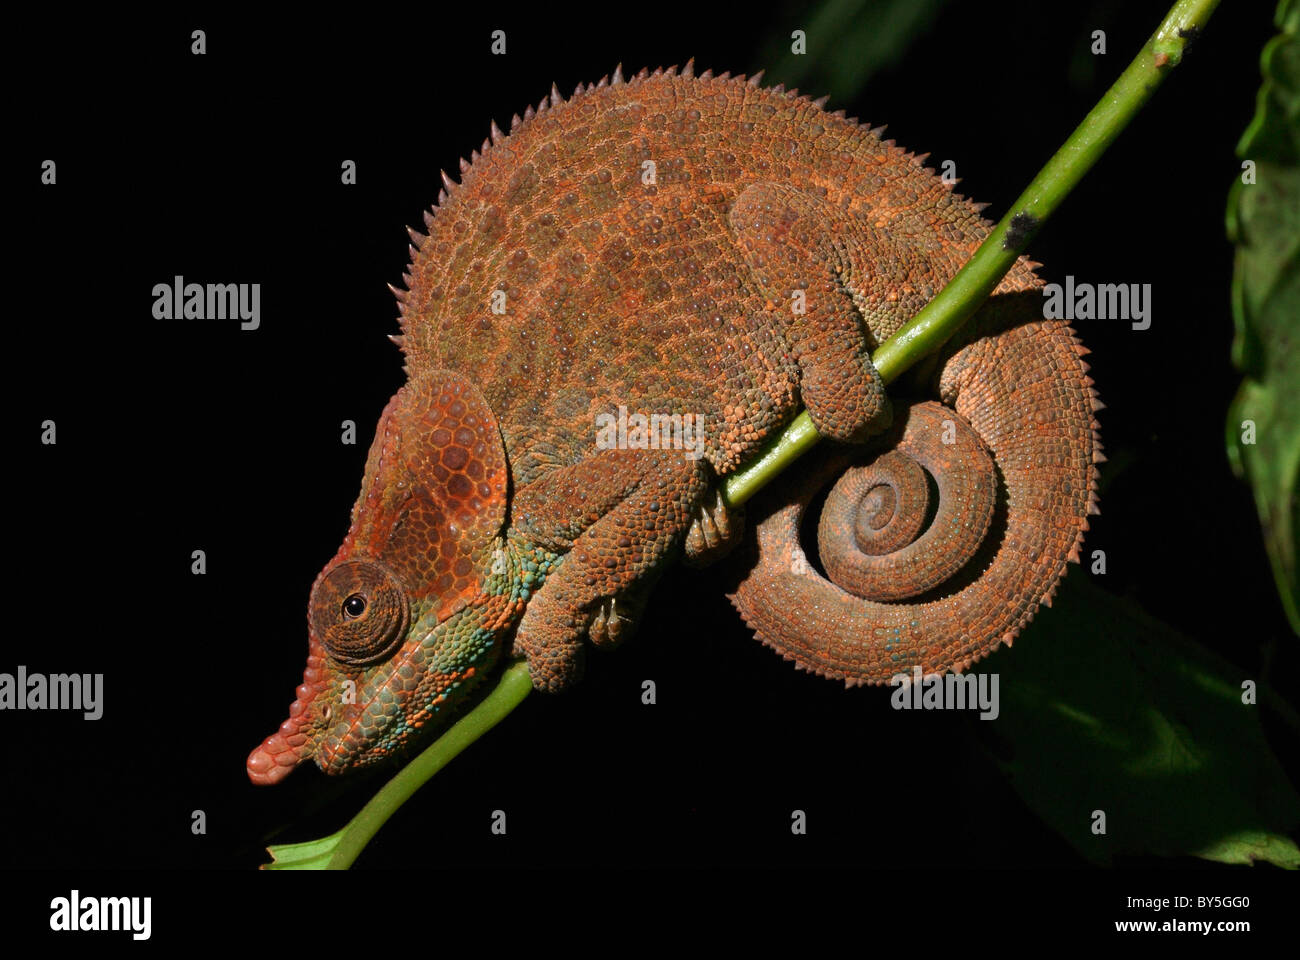 Male Cryptic Chameleon (Calumma crypticum) in the rainforest of Ranomafana National Park, eastern Madagascar. August 2010. Stock Photo